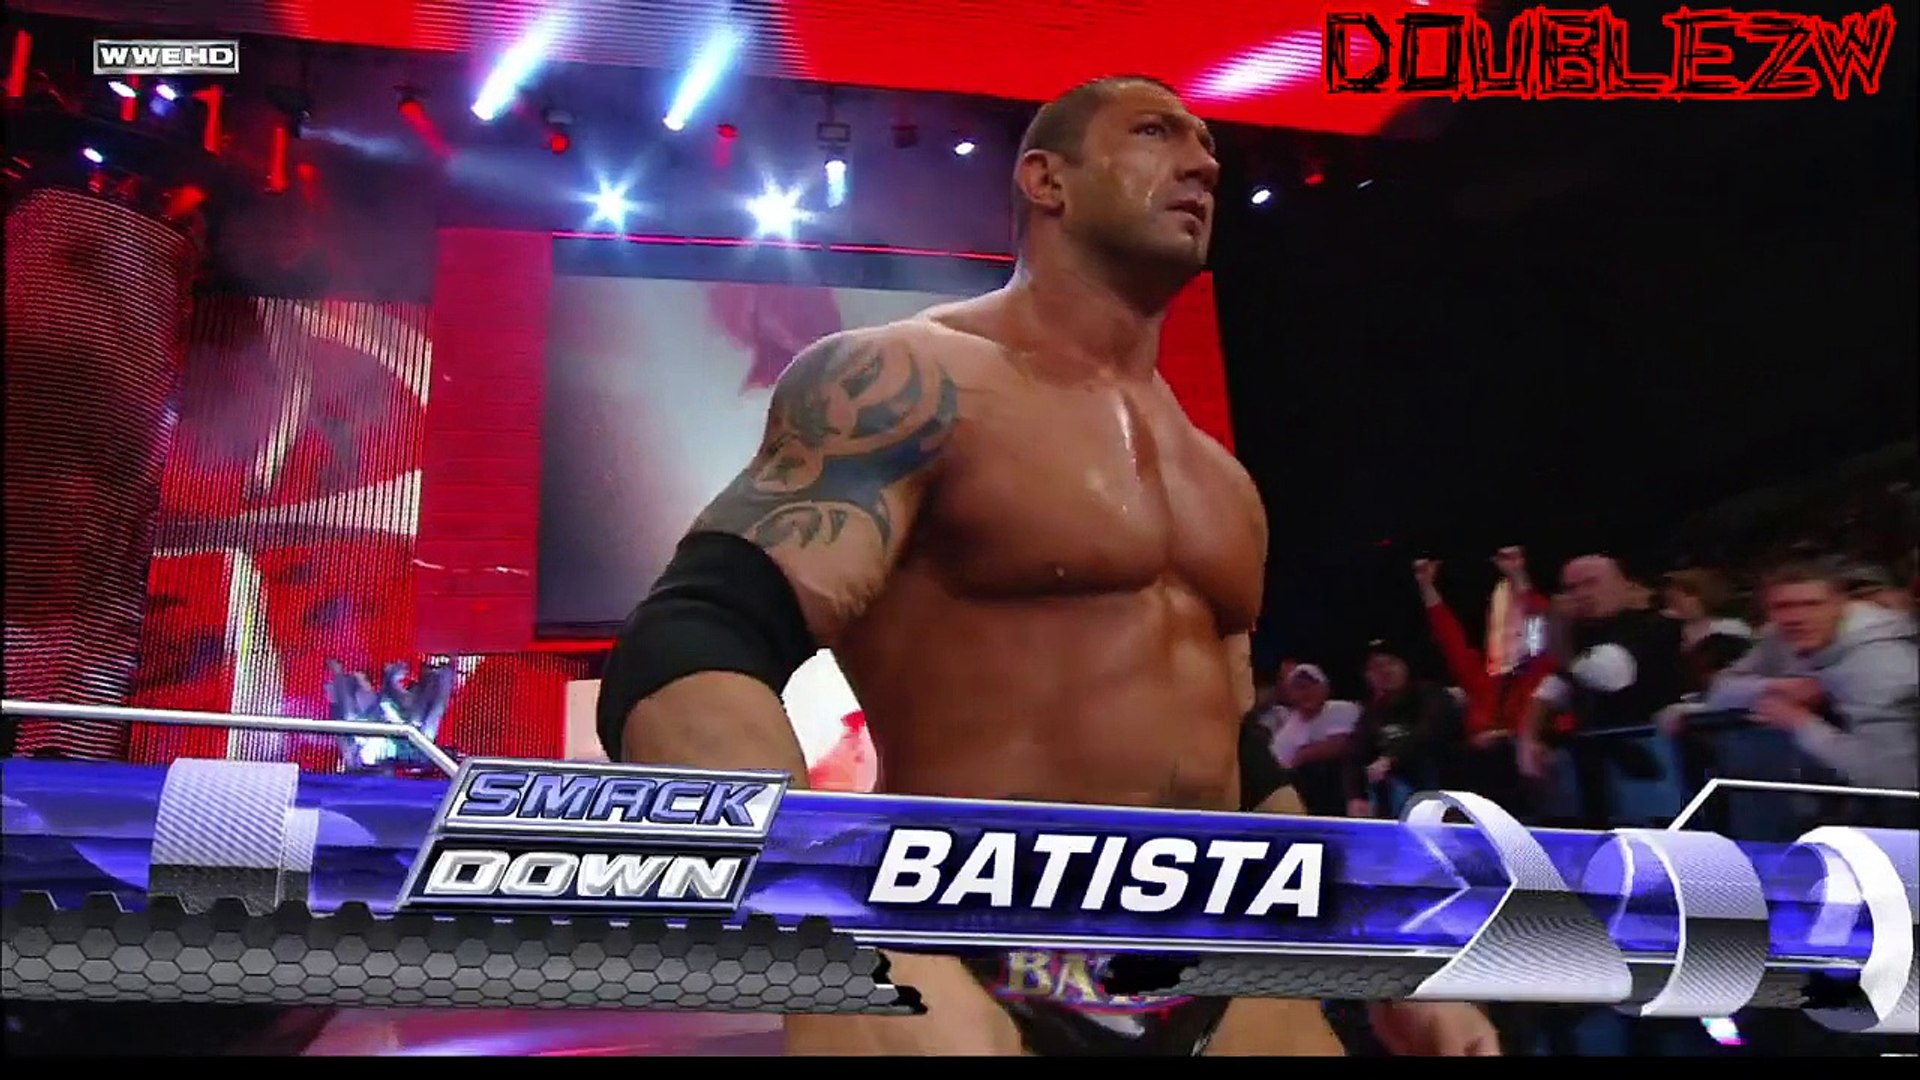 Smackdown Vs Raw 2008 Batista - HD Wallpaper 